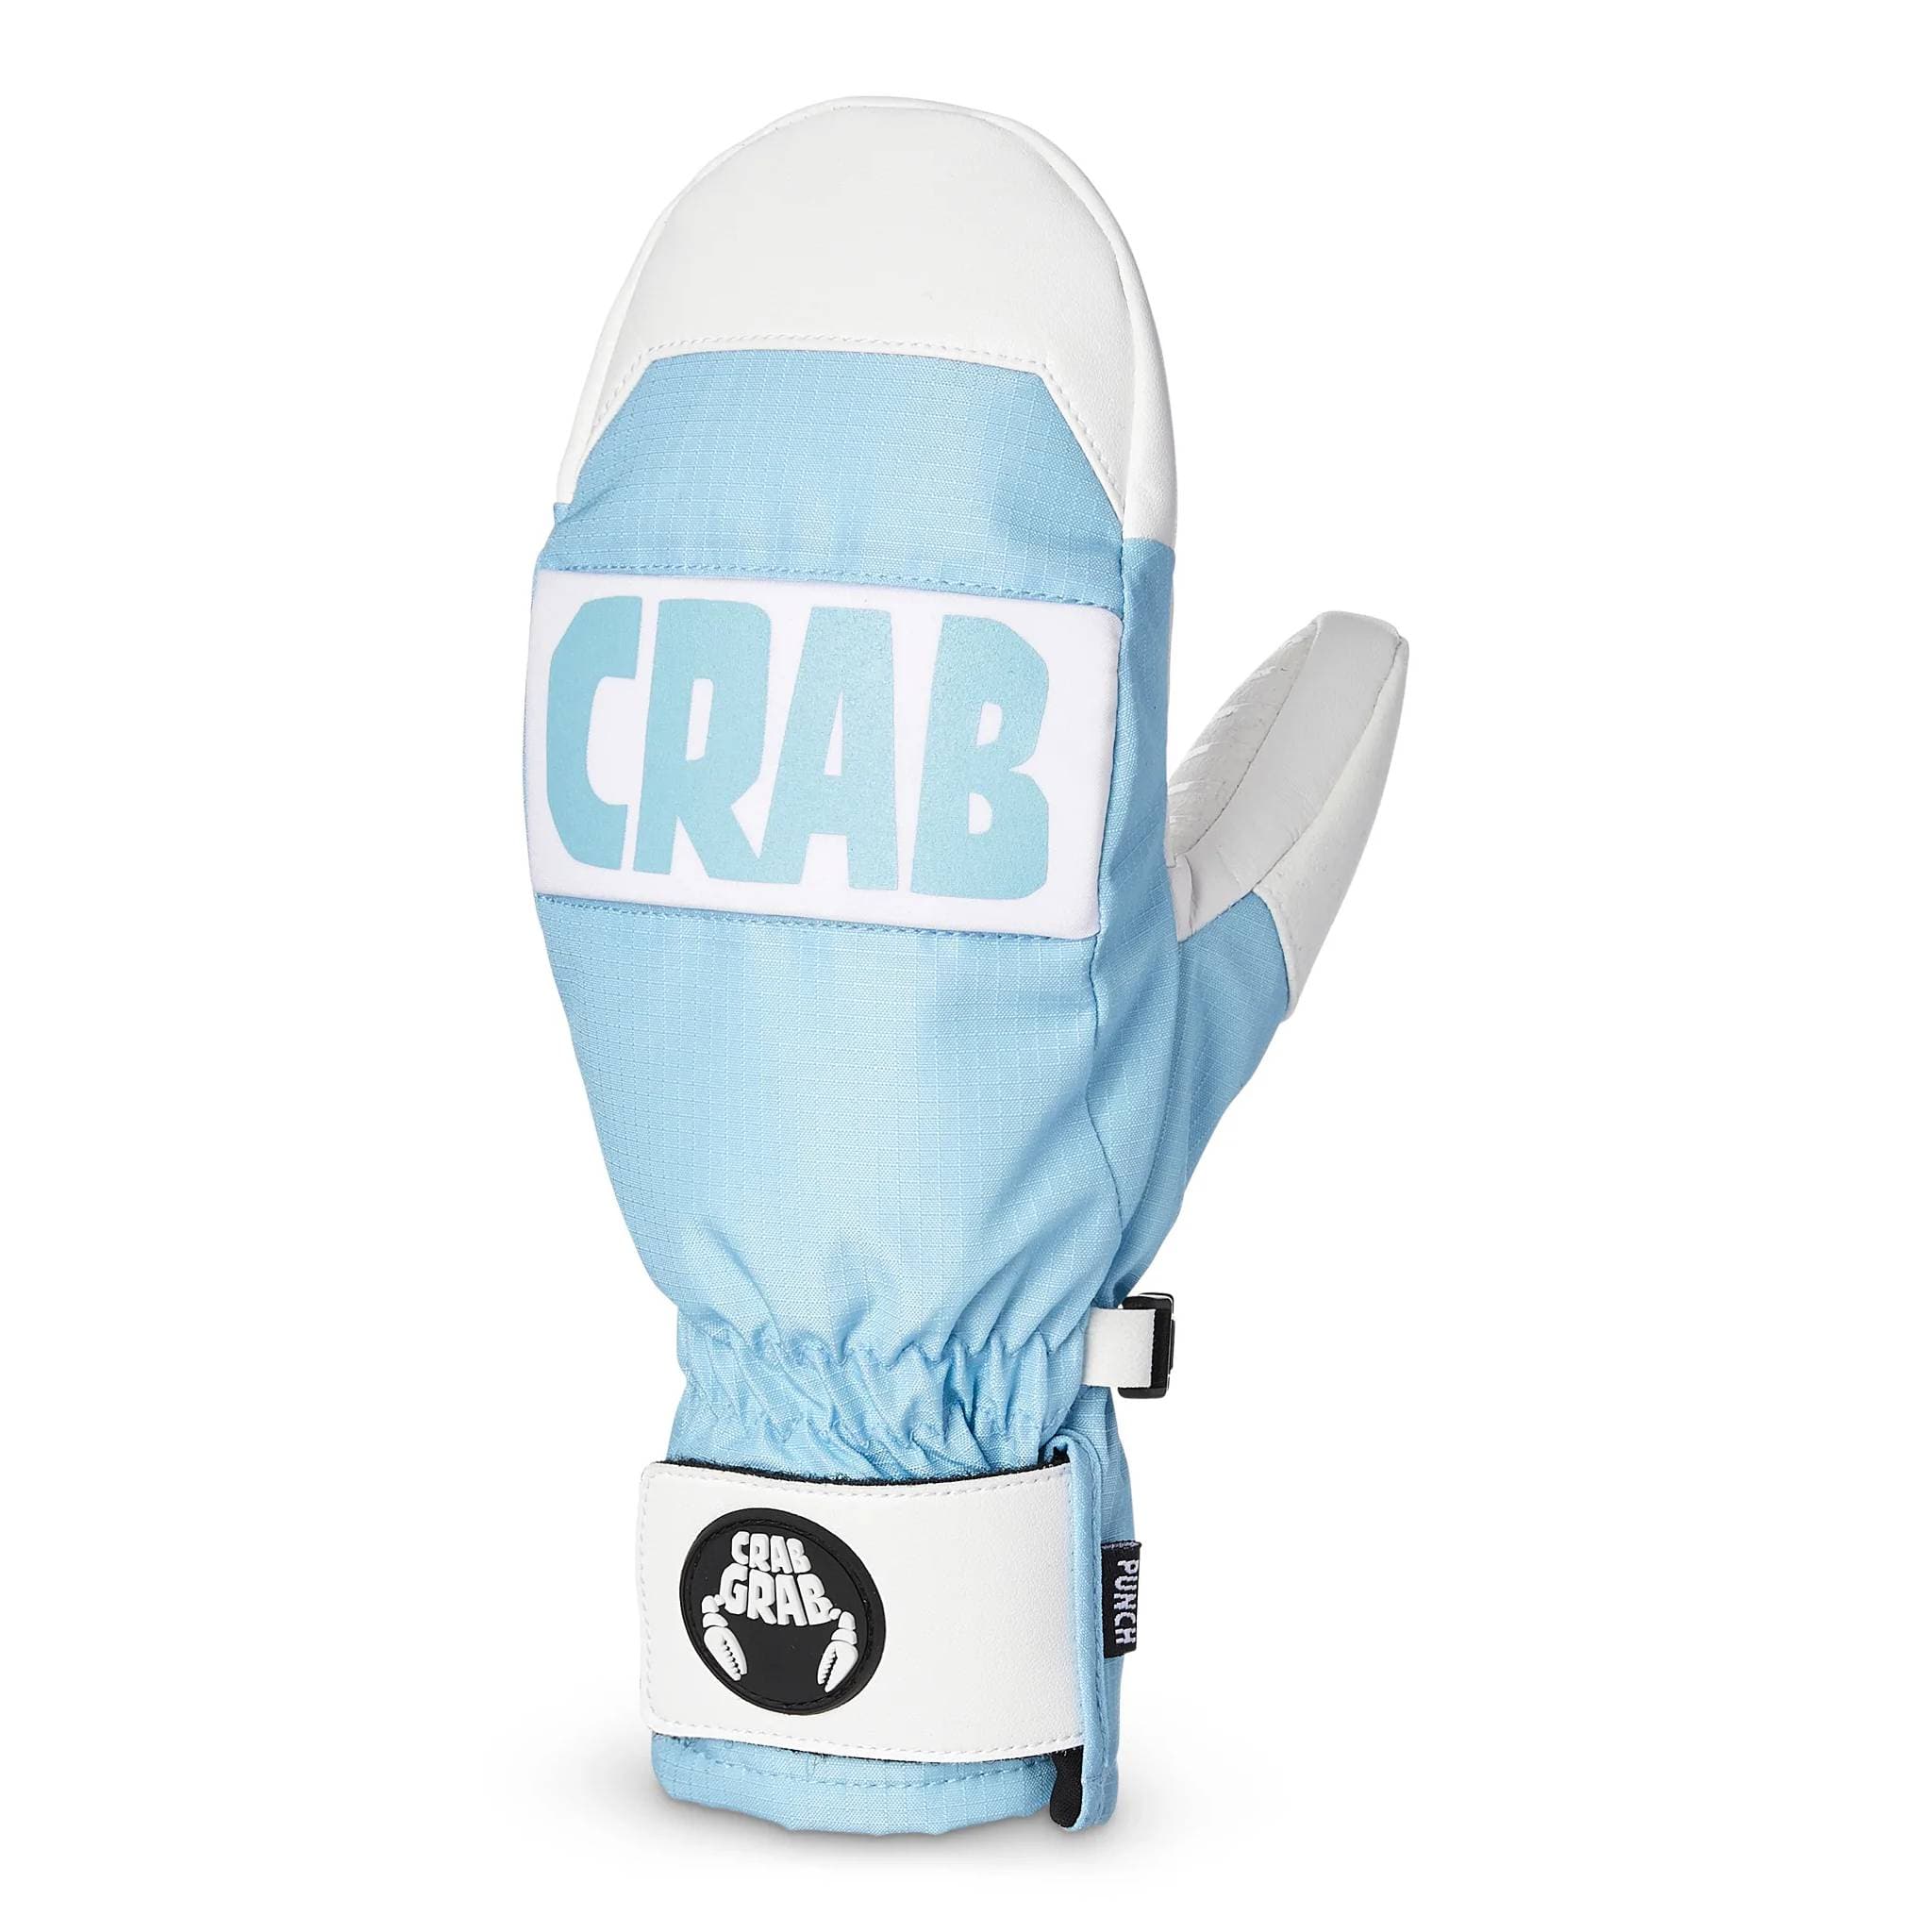 Crab Grab Punch Youth Mitt